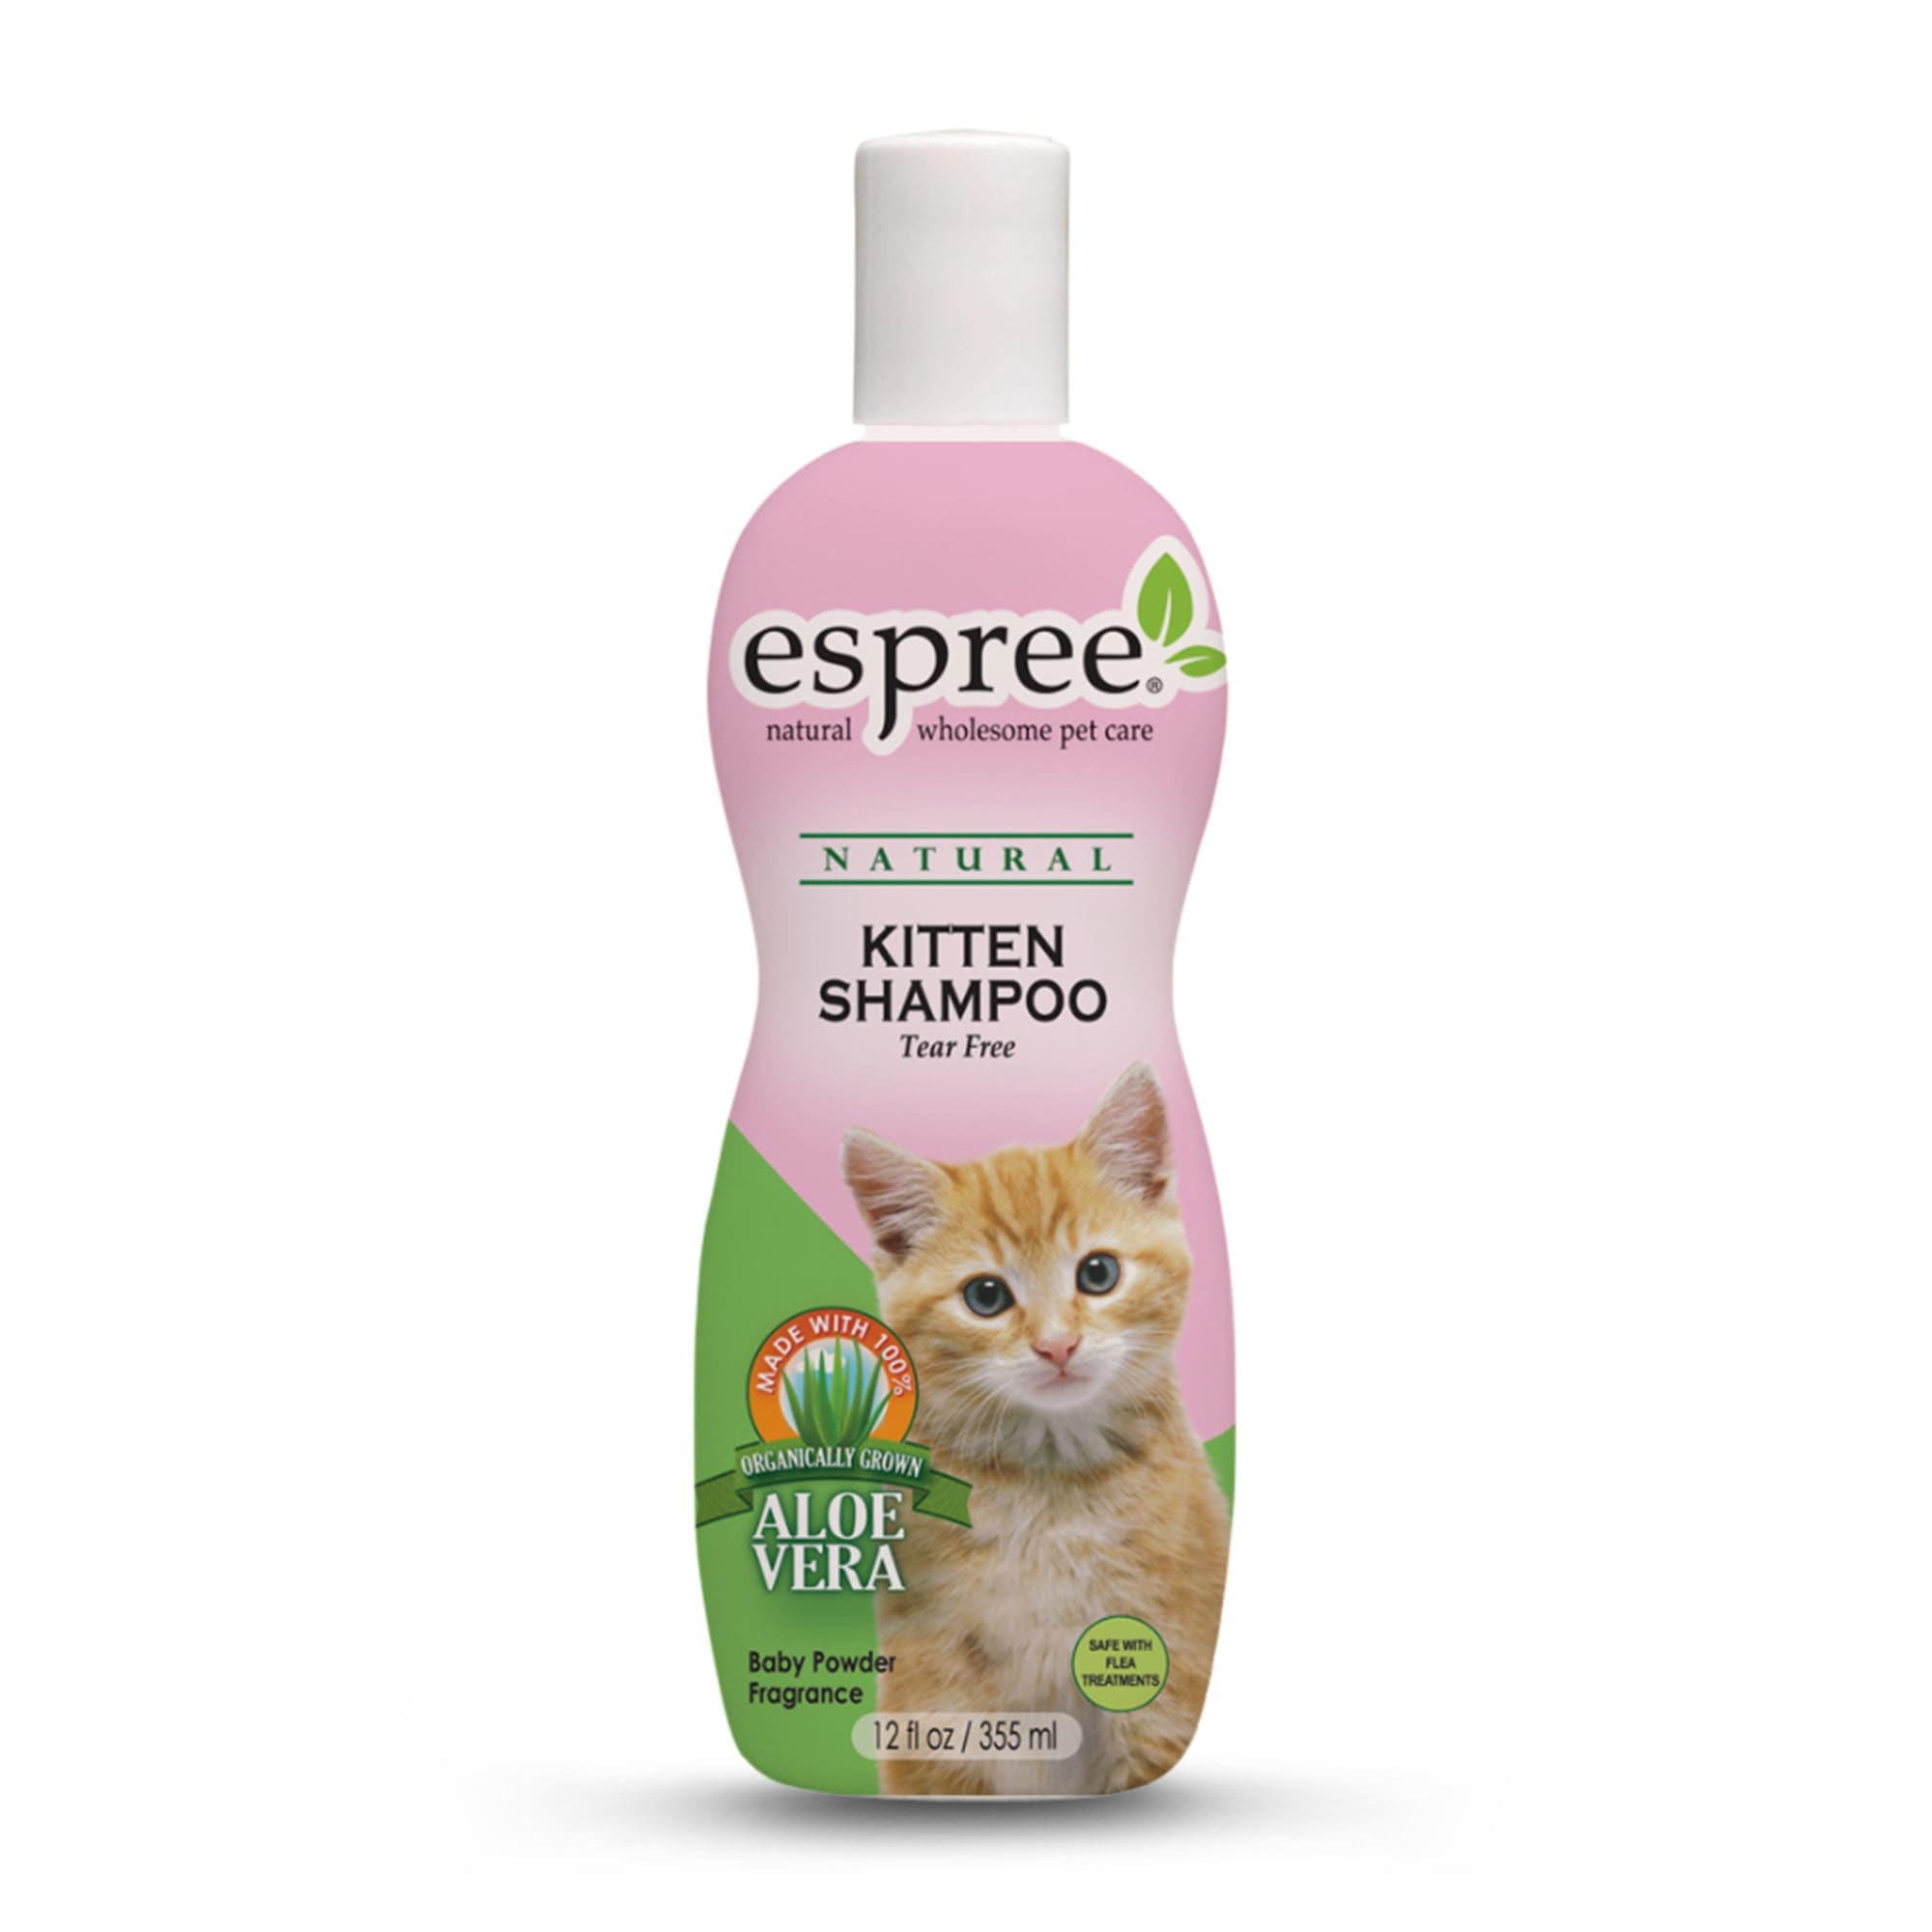 Espree Natural Kitten Shampoo | Petco